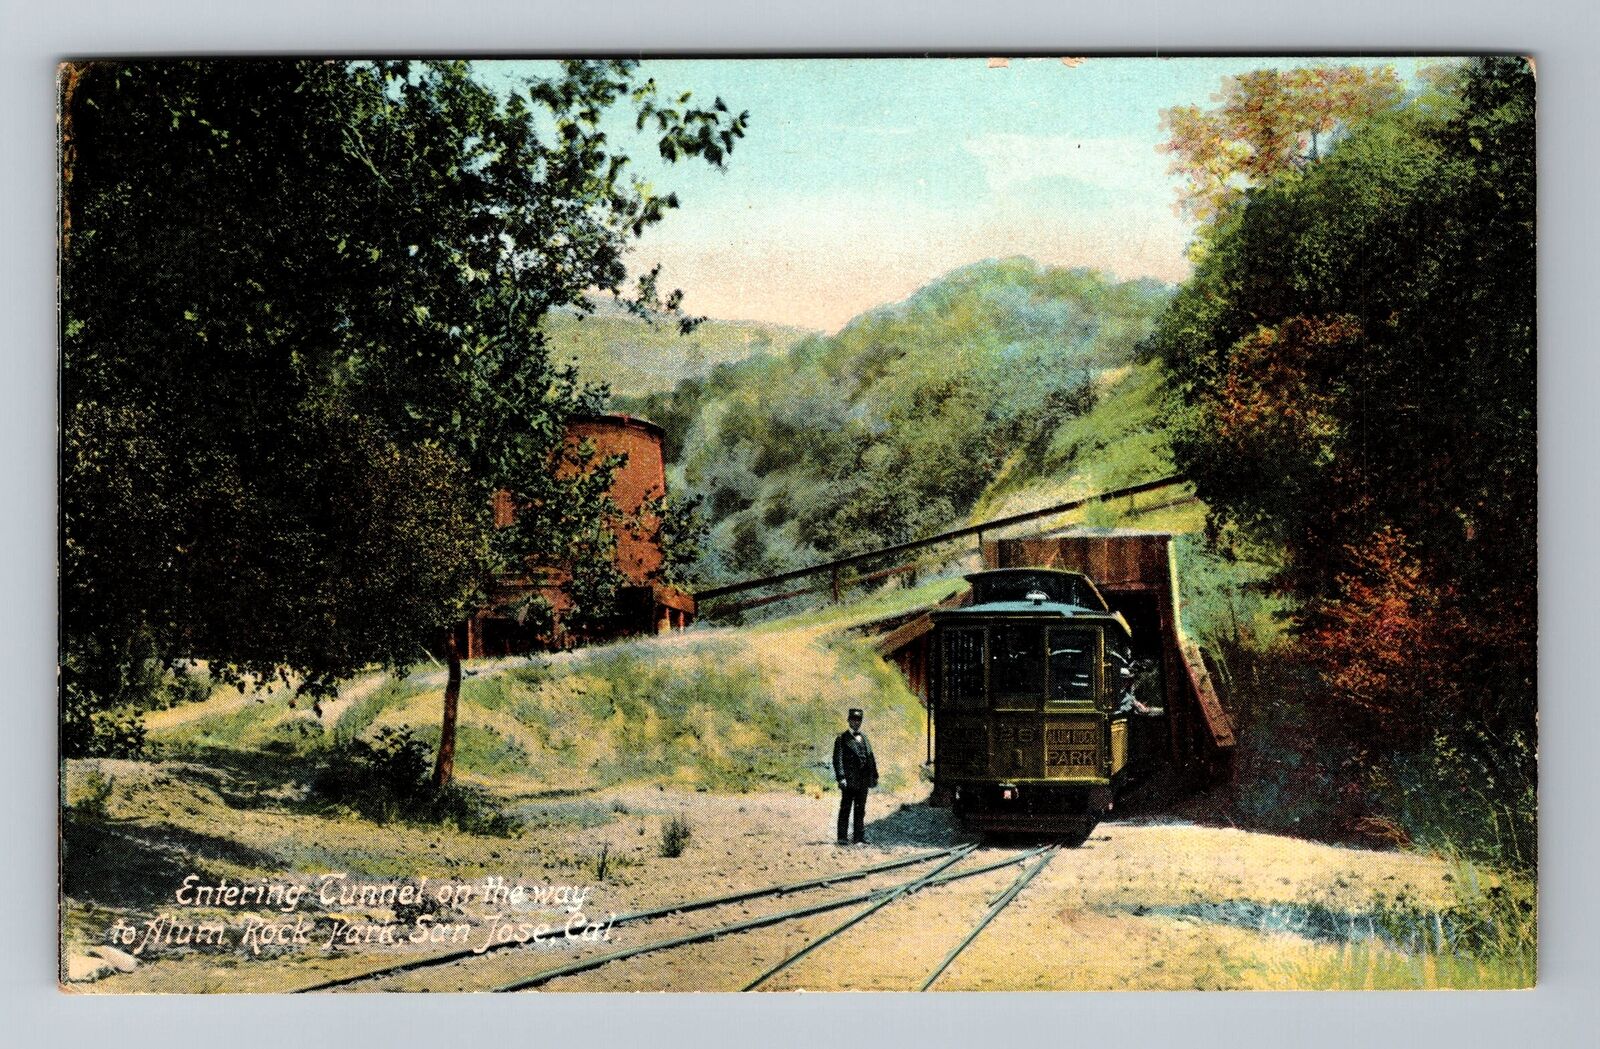 San Jose CA-California, Entering Tunnel, Scenic Train, Vintage Postcard